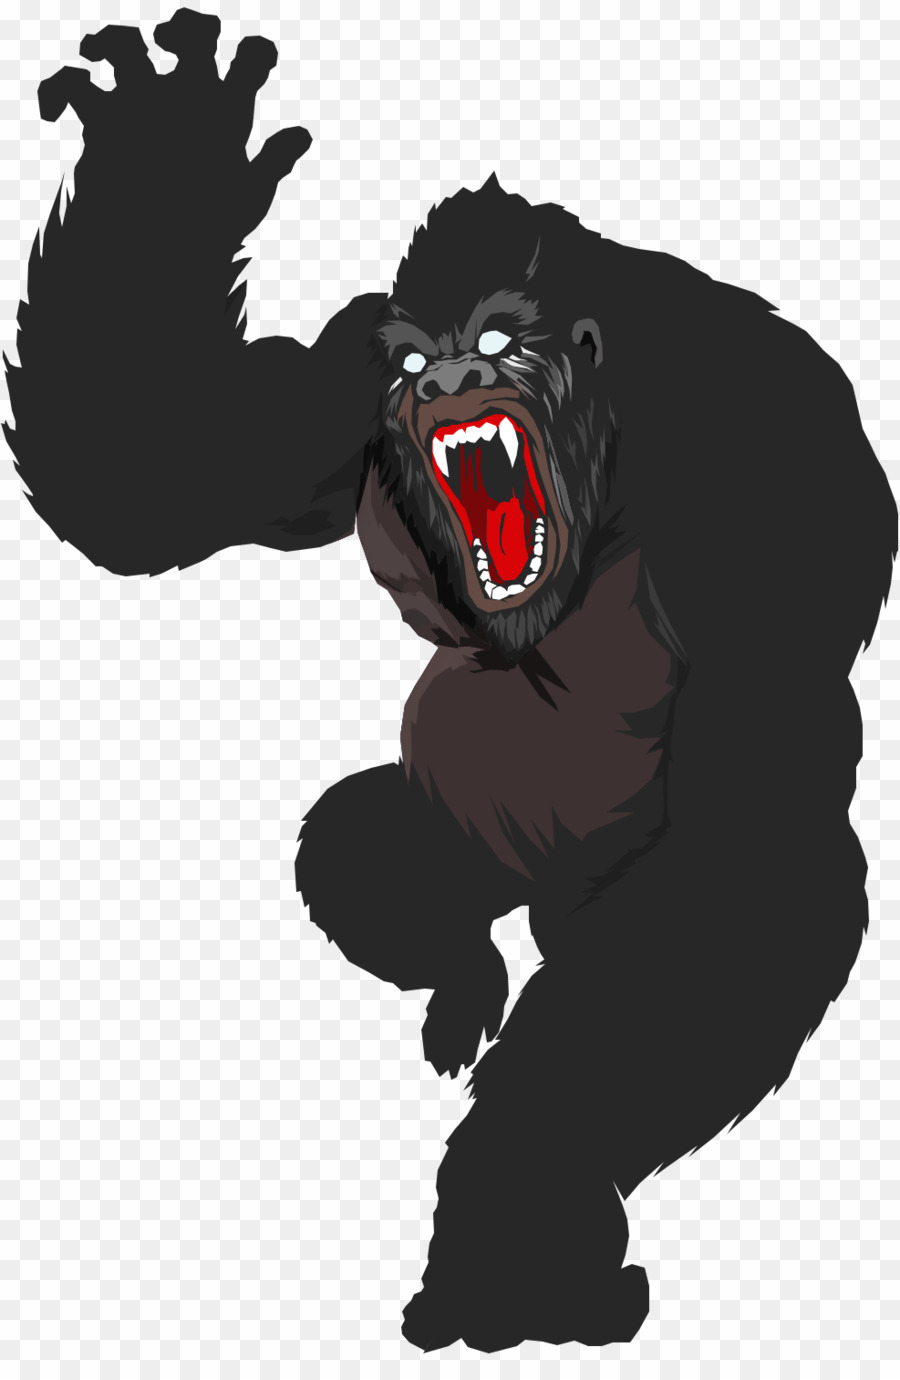 Gorilla Vector PNG Gorilla Ape Clipart download